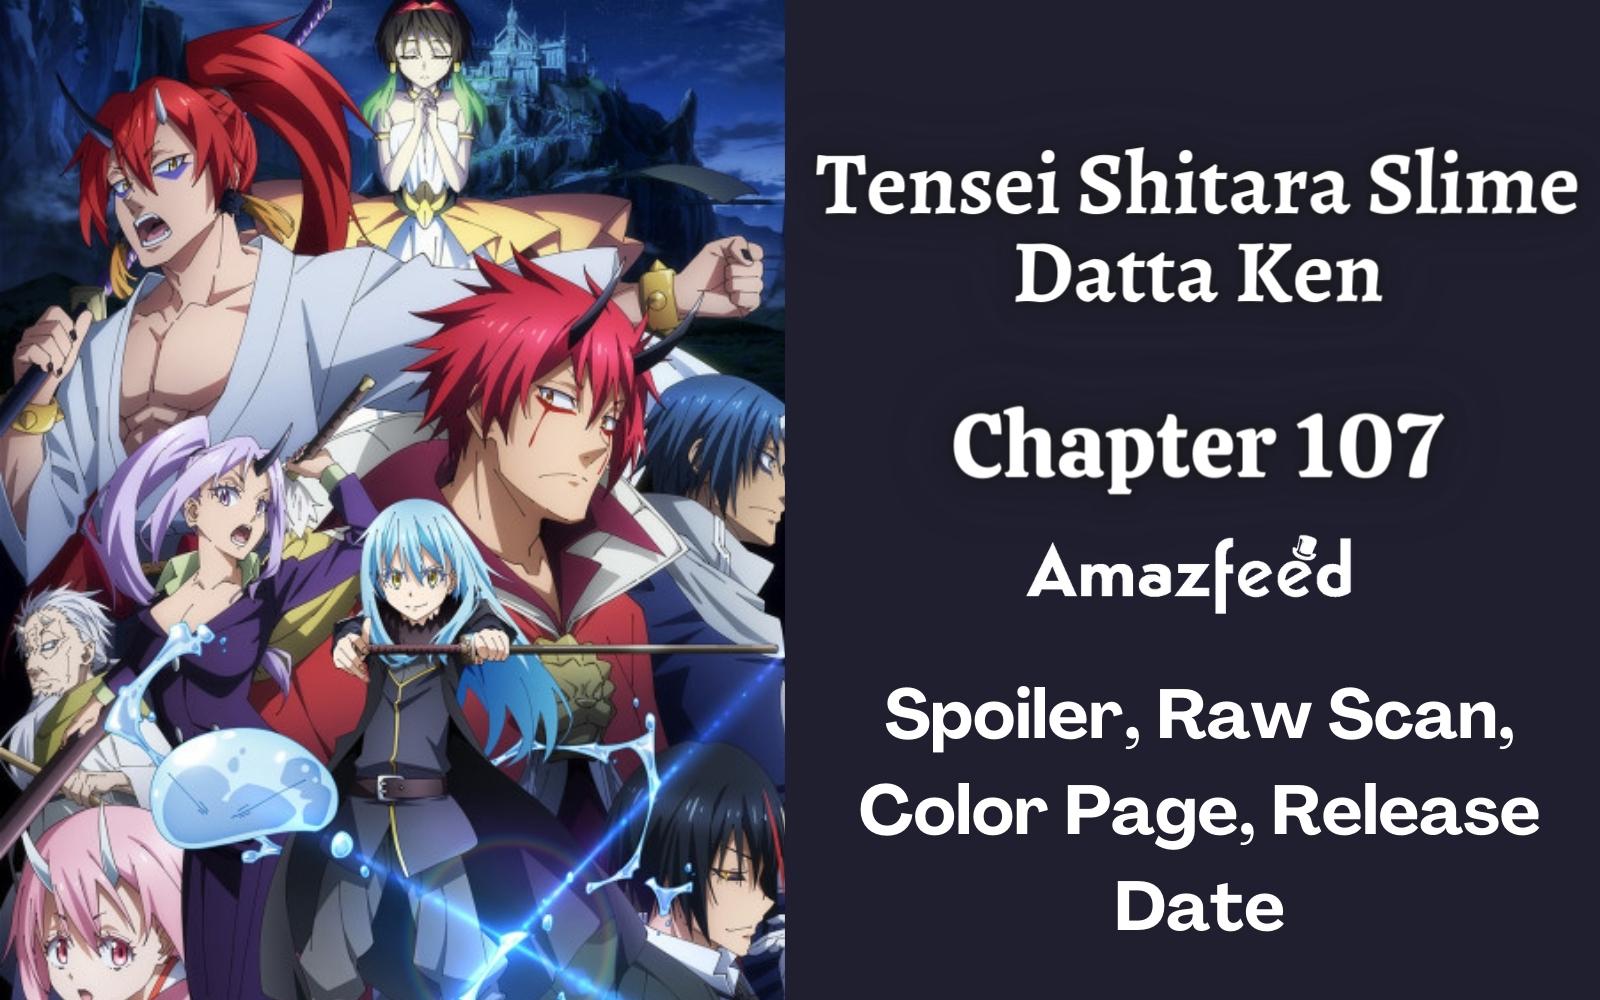 Tensei Shitara Slime Datta Ken Chapter 107 Spoiler, Raw Scan, Color Page, Release Date